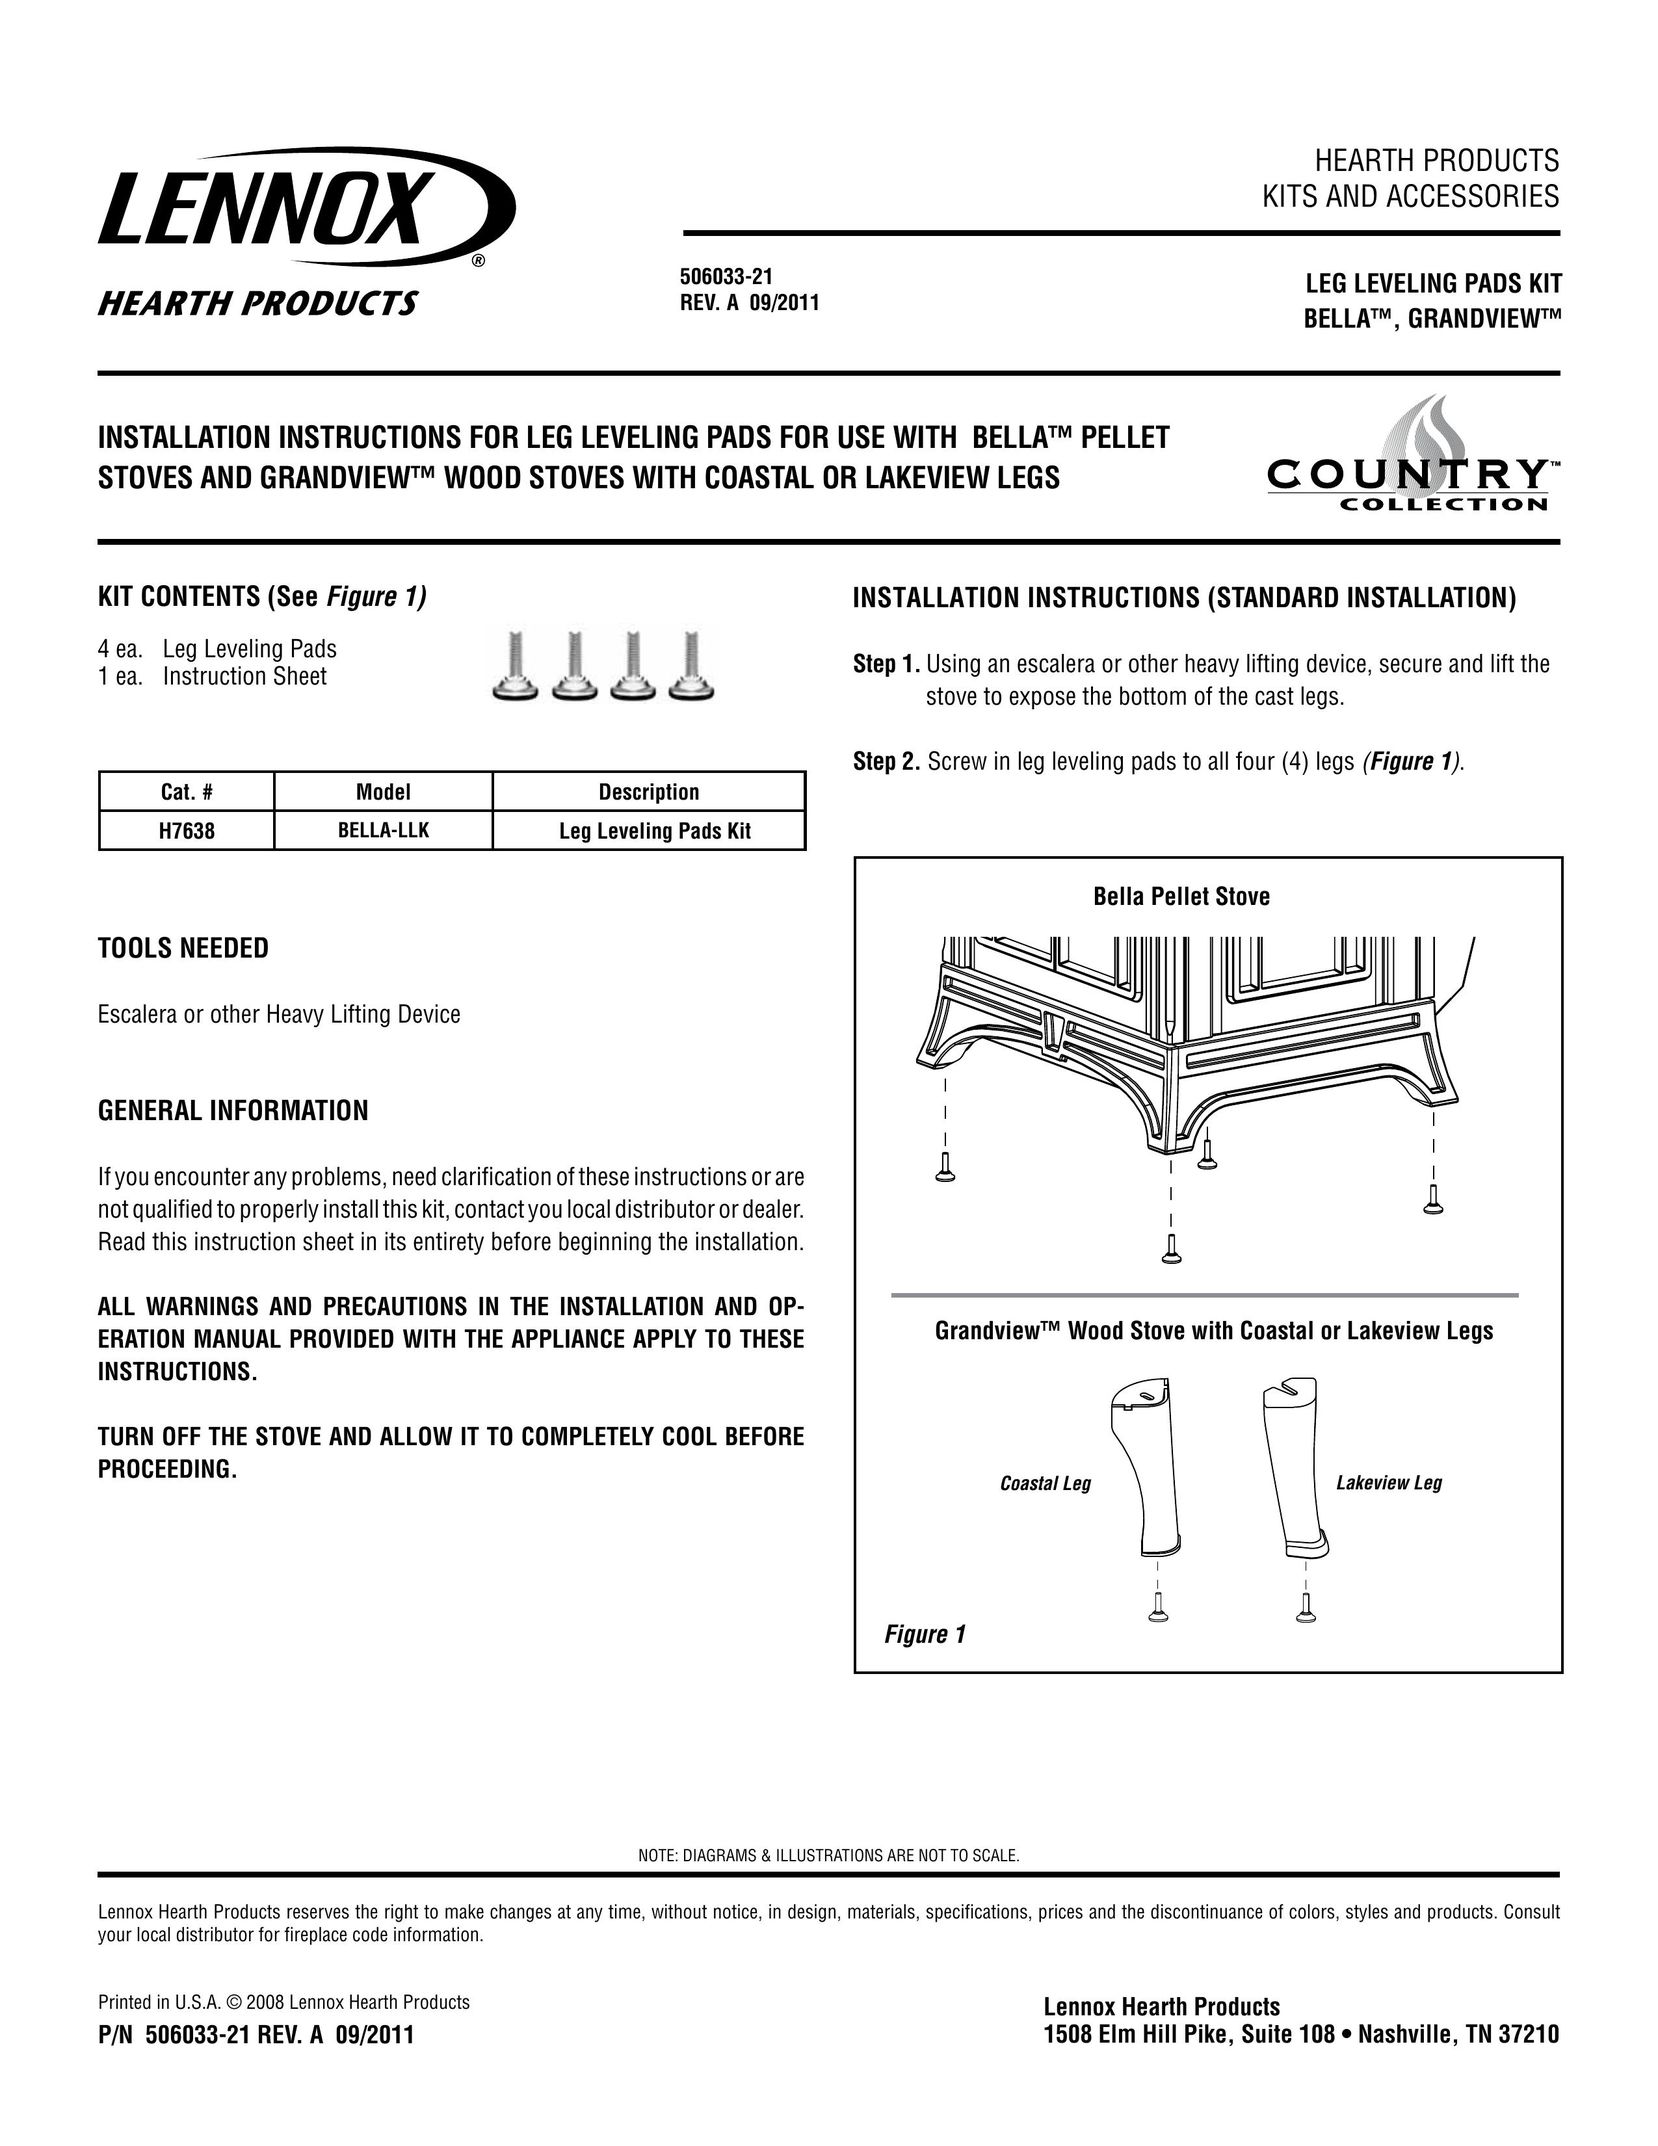 Lennox Hearth H7638 Stove User Manual